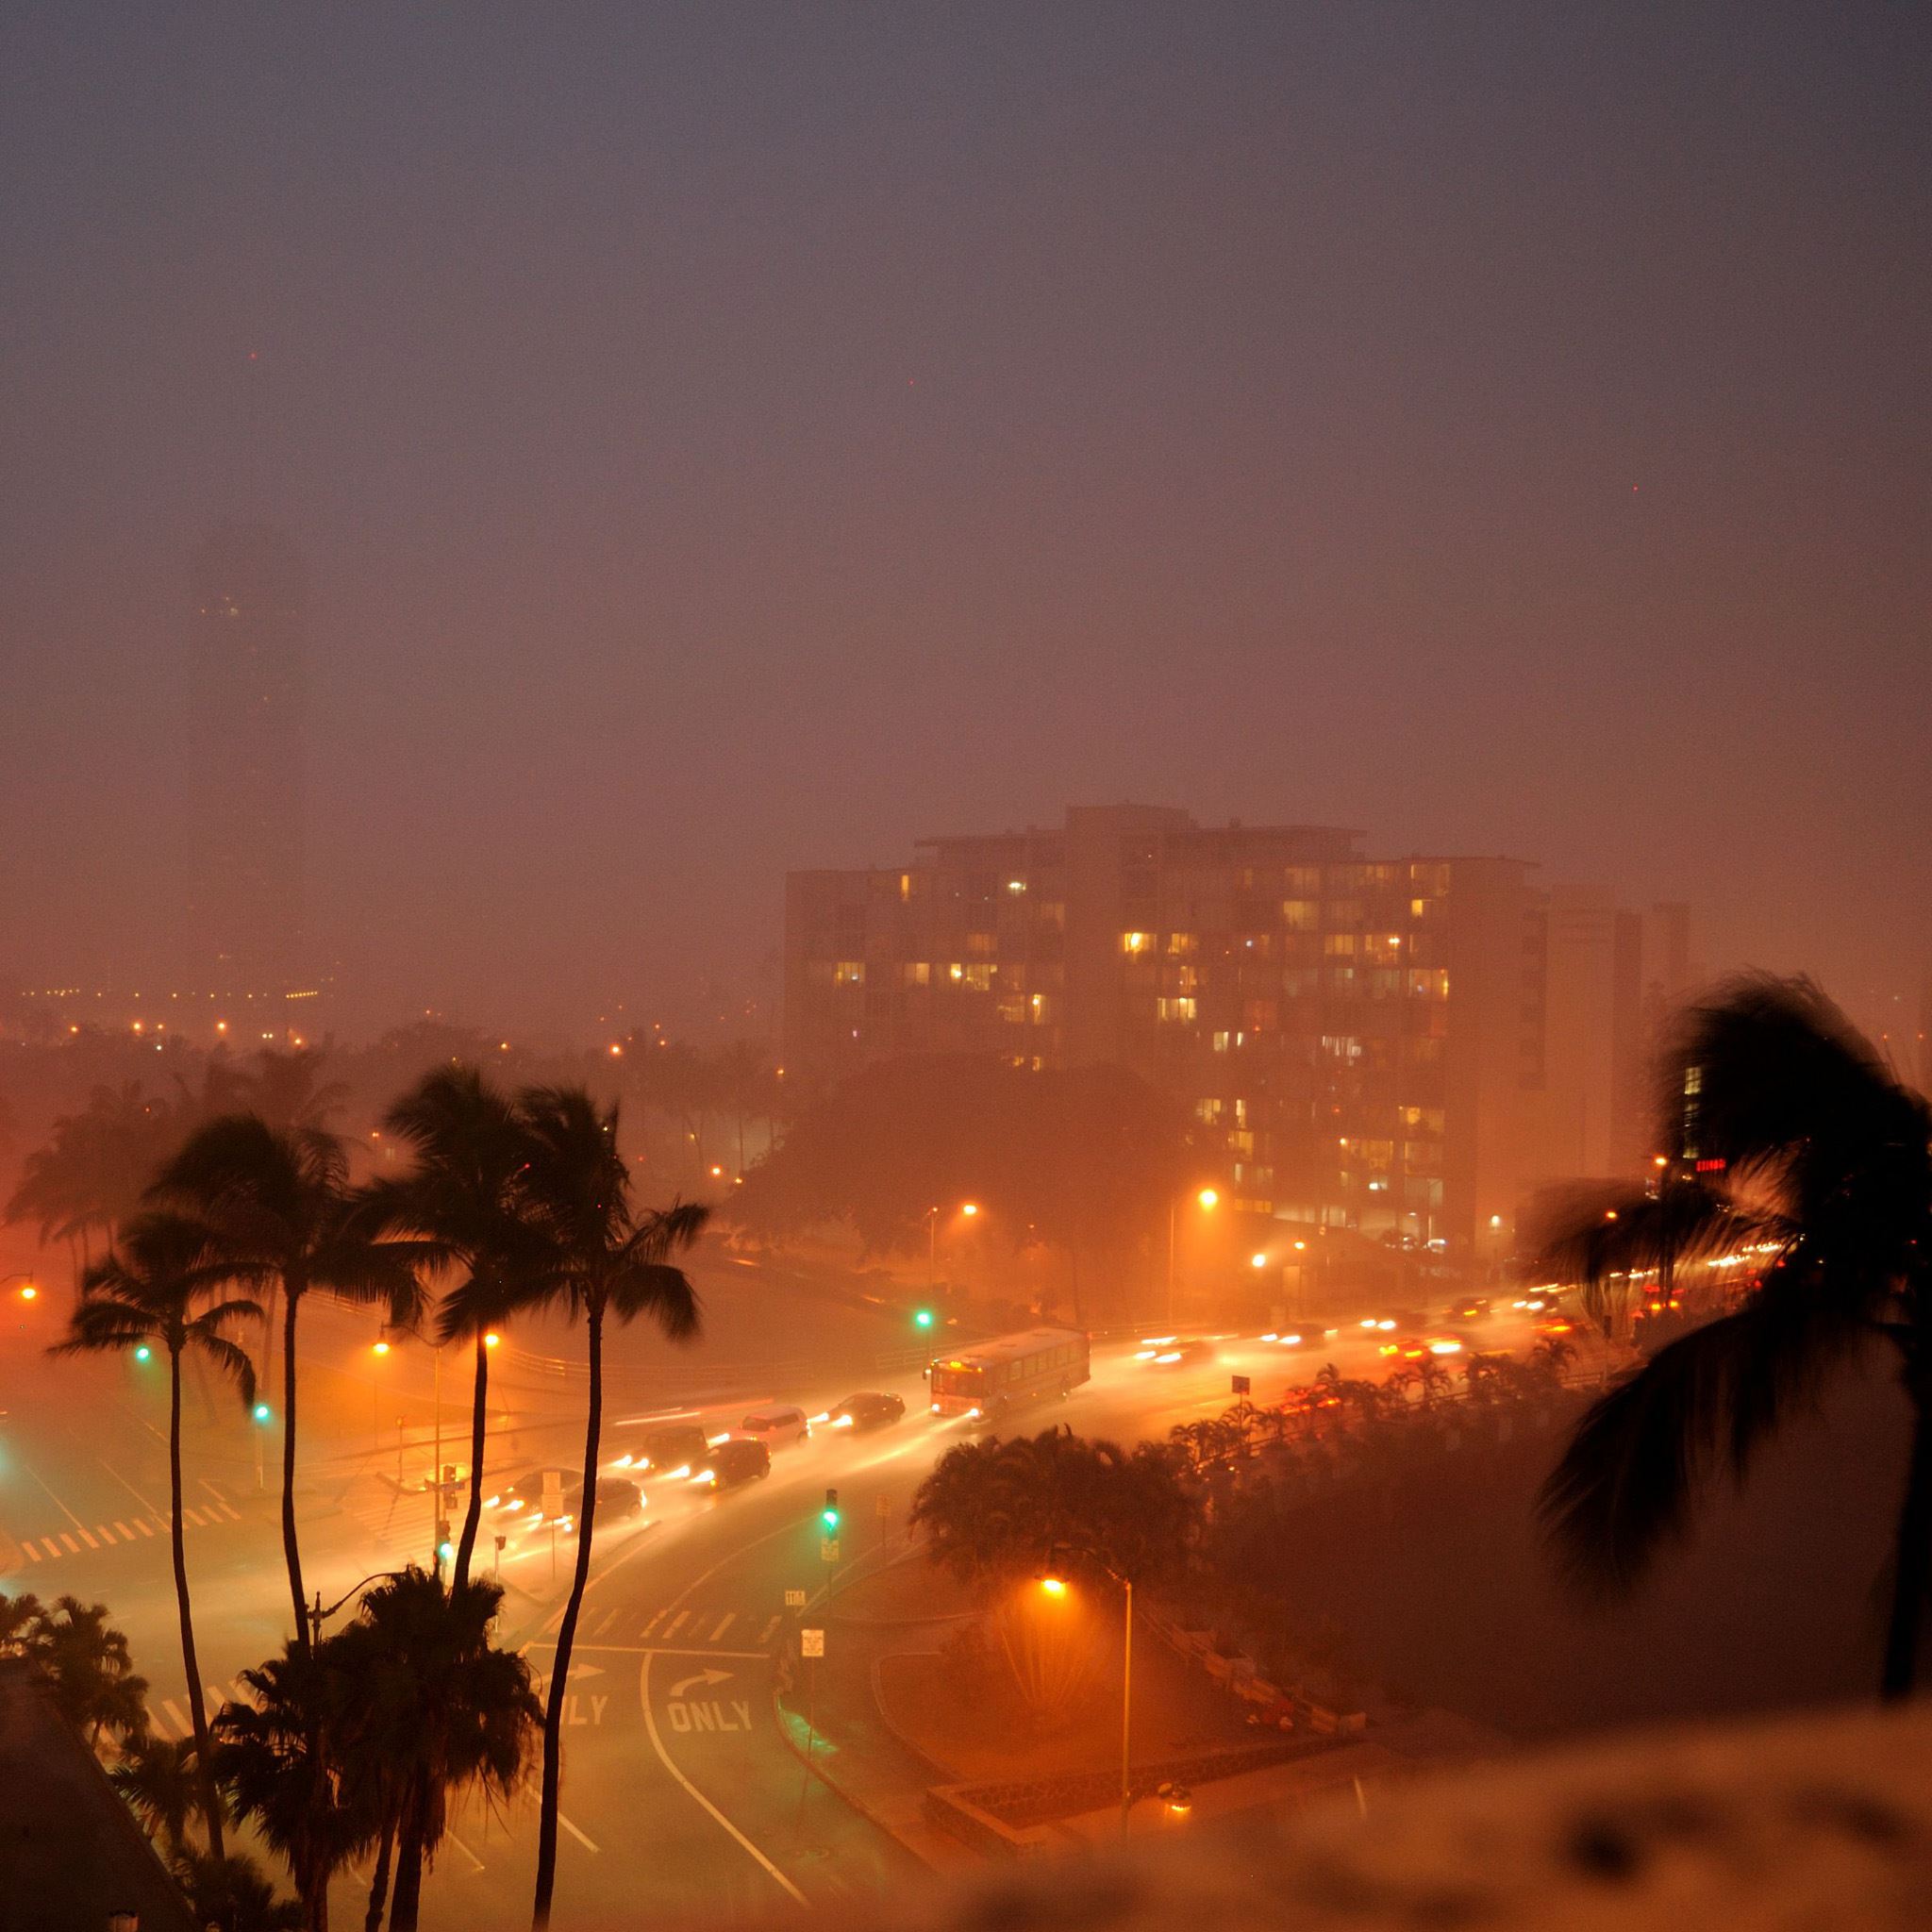 Rainy Tropical Night City iPad Air wallpaper 